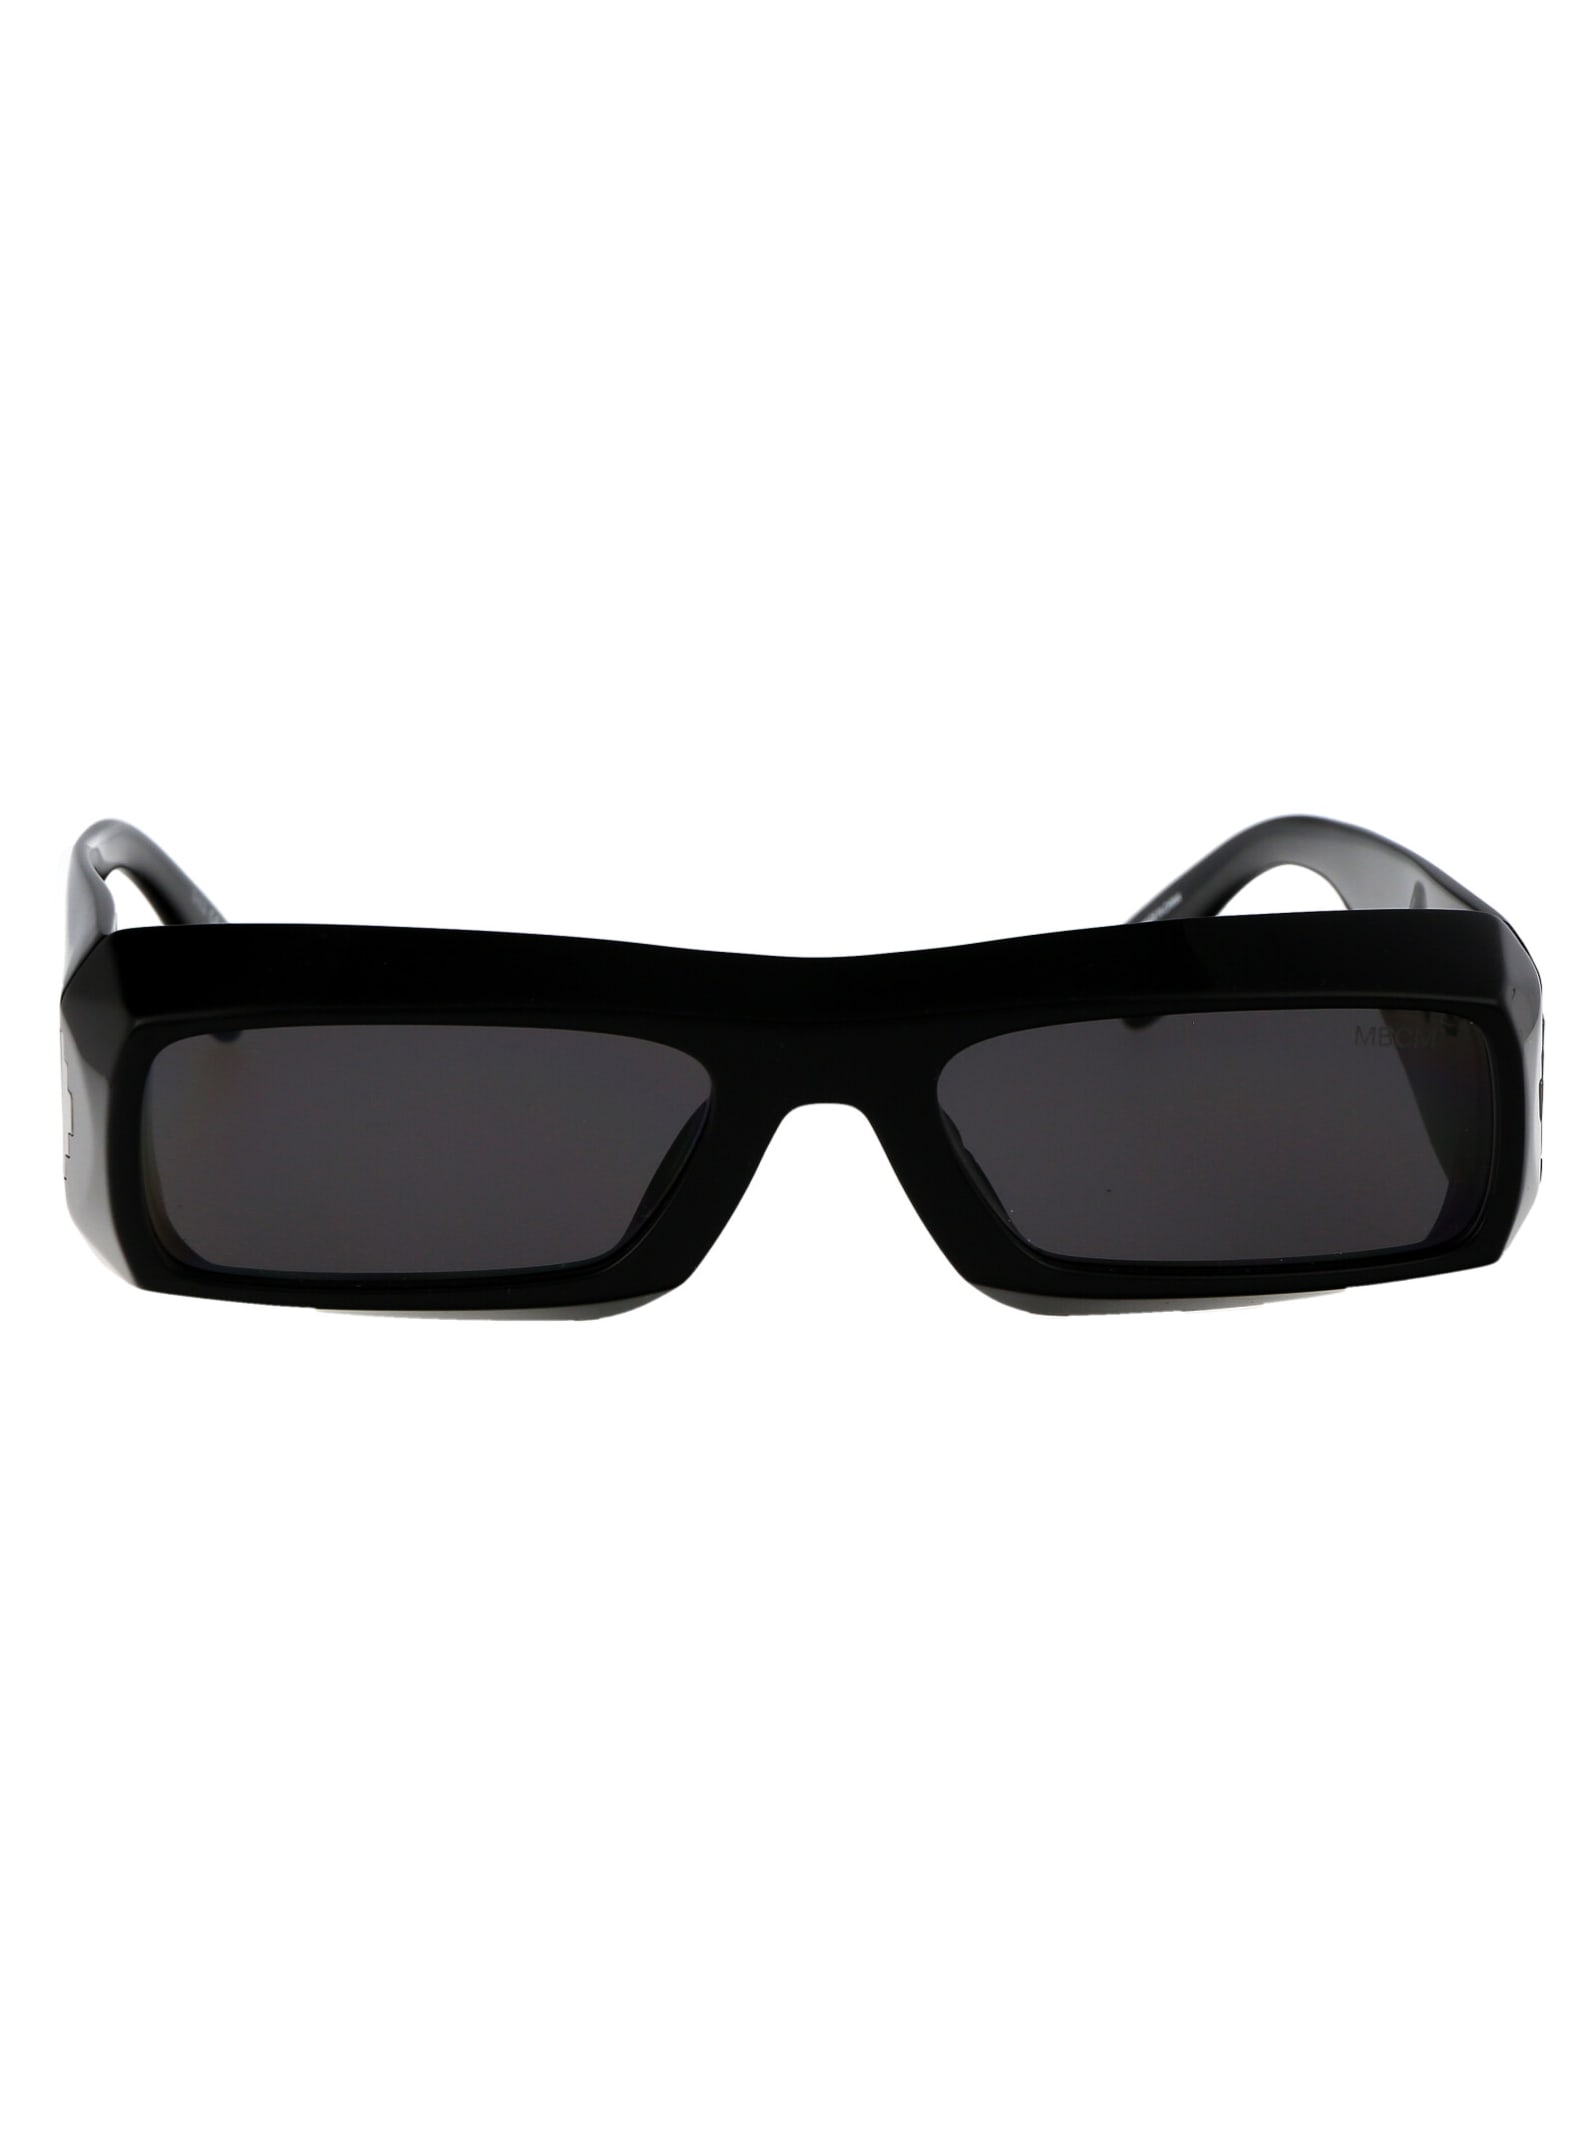 Maqui Sunglasses